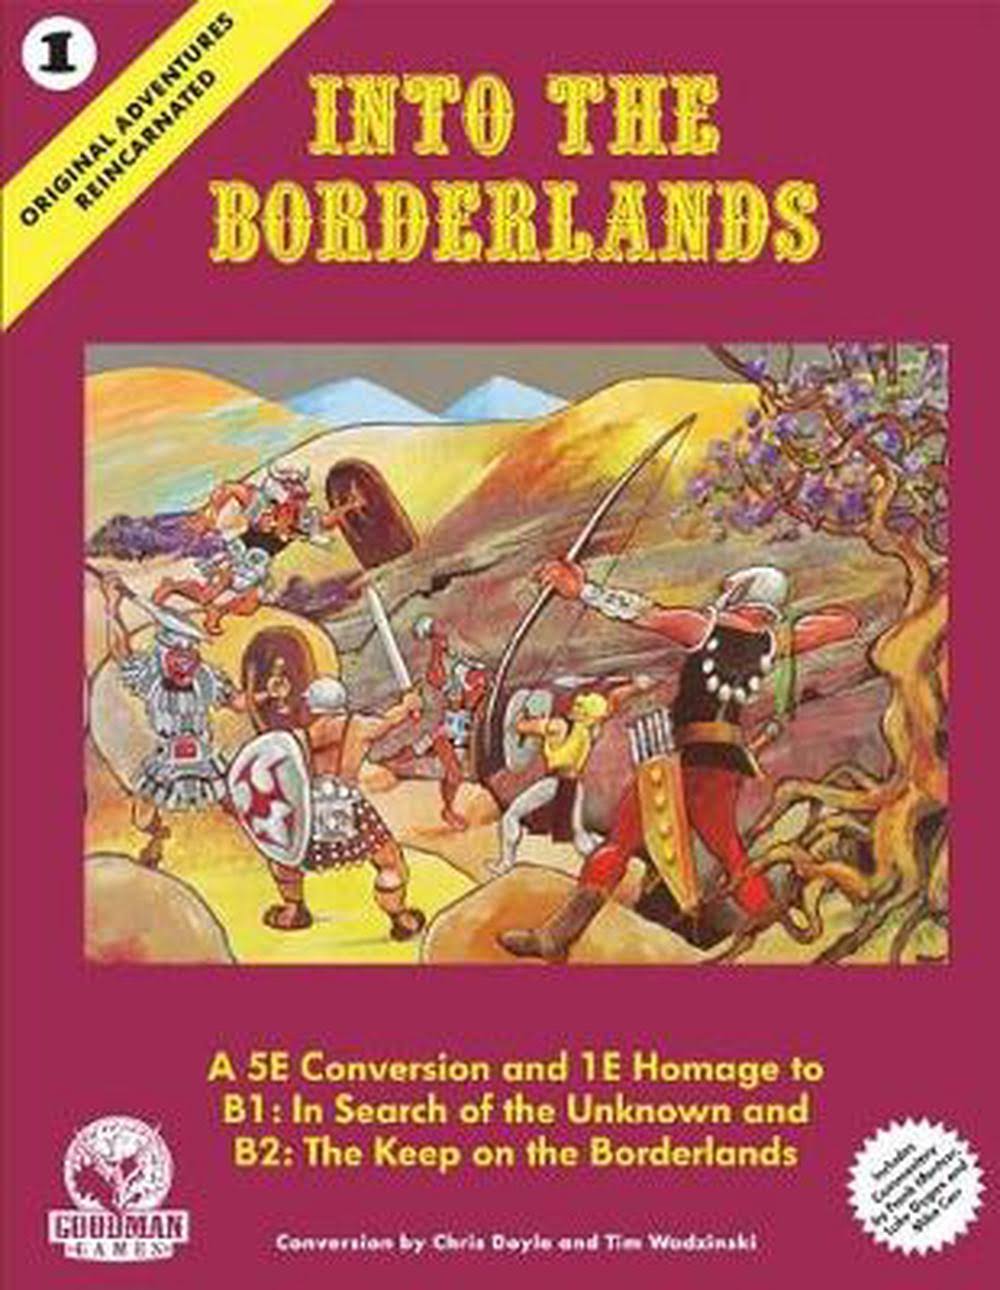 Original Adventures Reincarnated #1: Into the Borderlands - Good Games Publishing